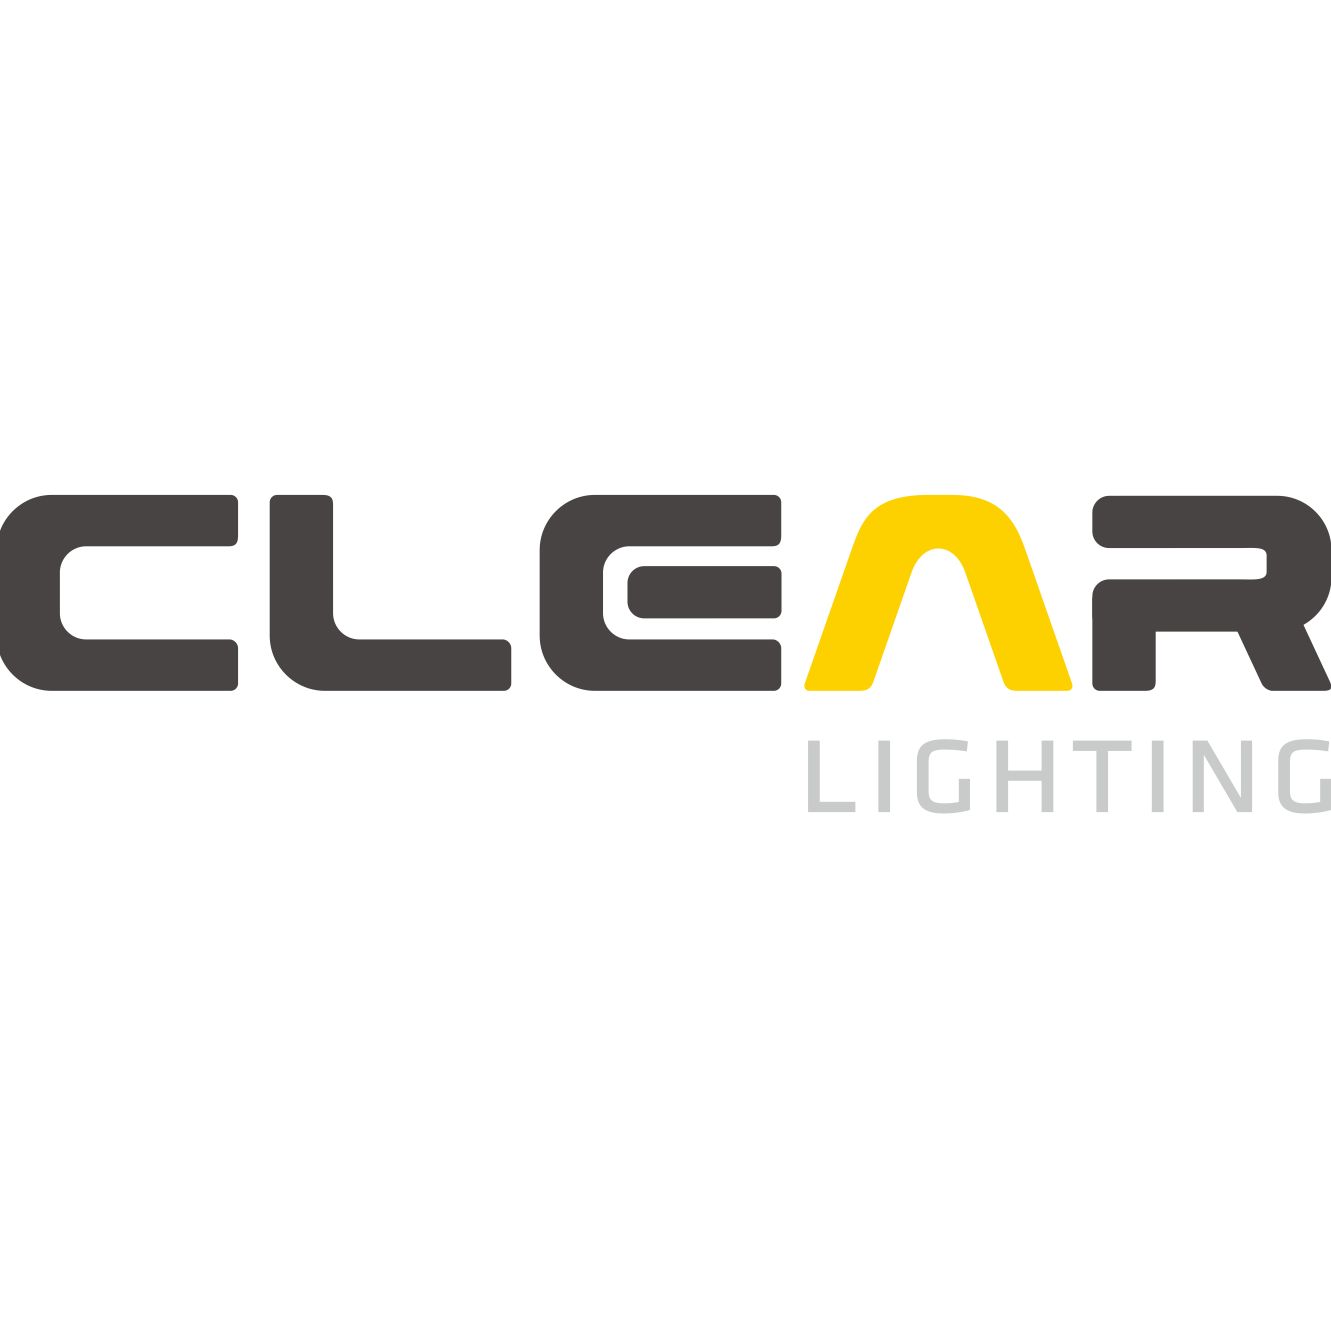 CLEAR LIGHTING CO.,LTD  logo